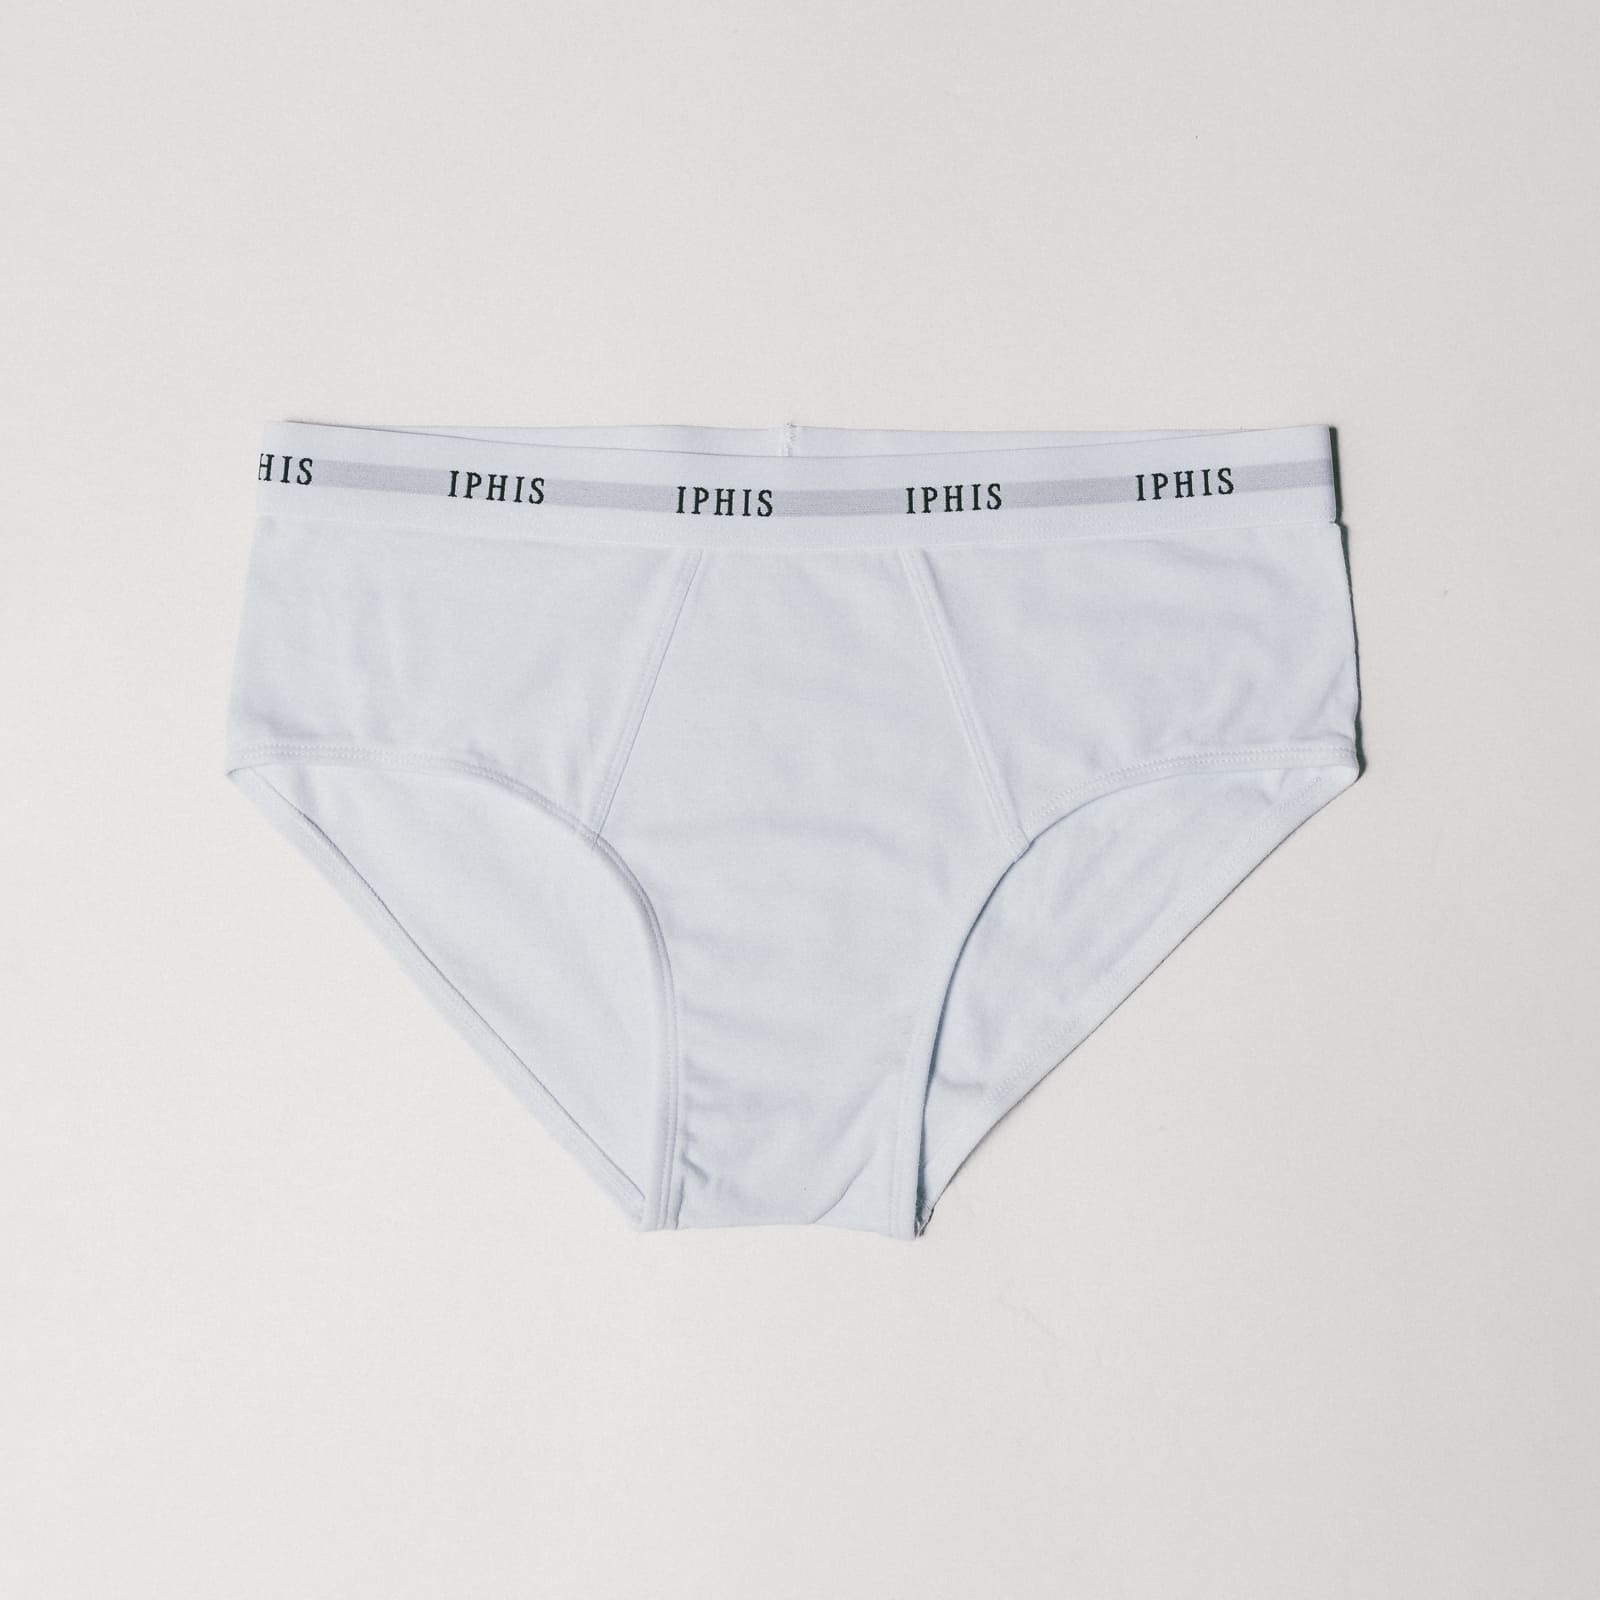 IPHIS Underwear Review